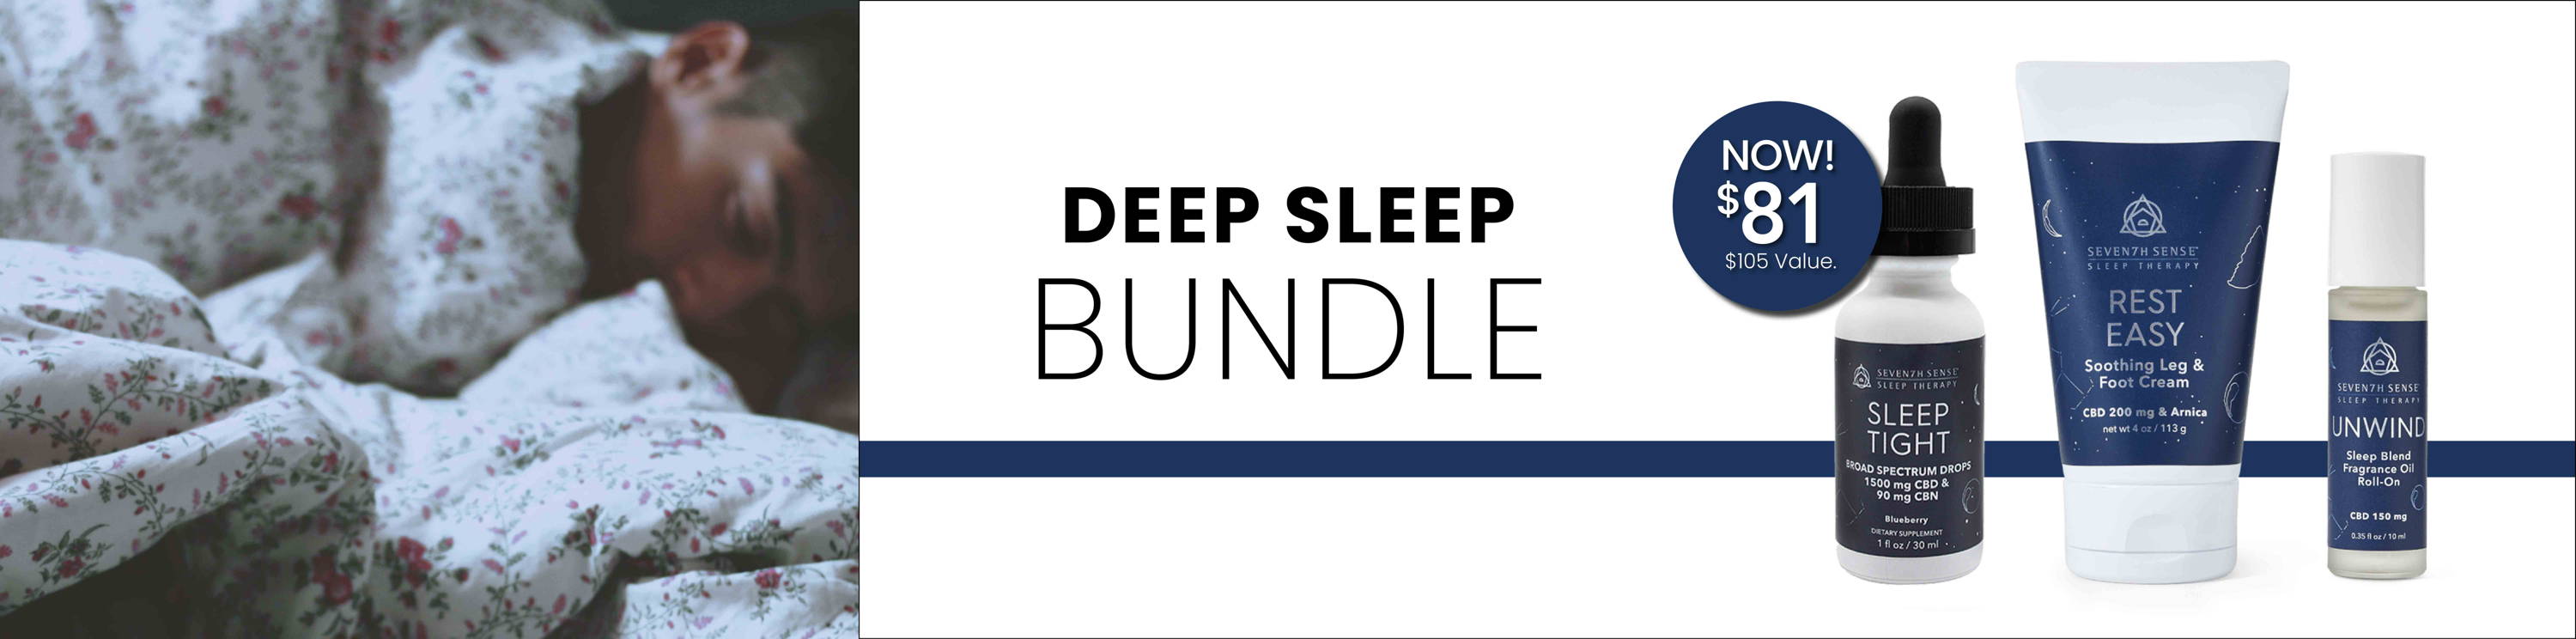 Deep Sleep Bundle now $81. $105 Value.